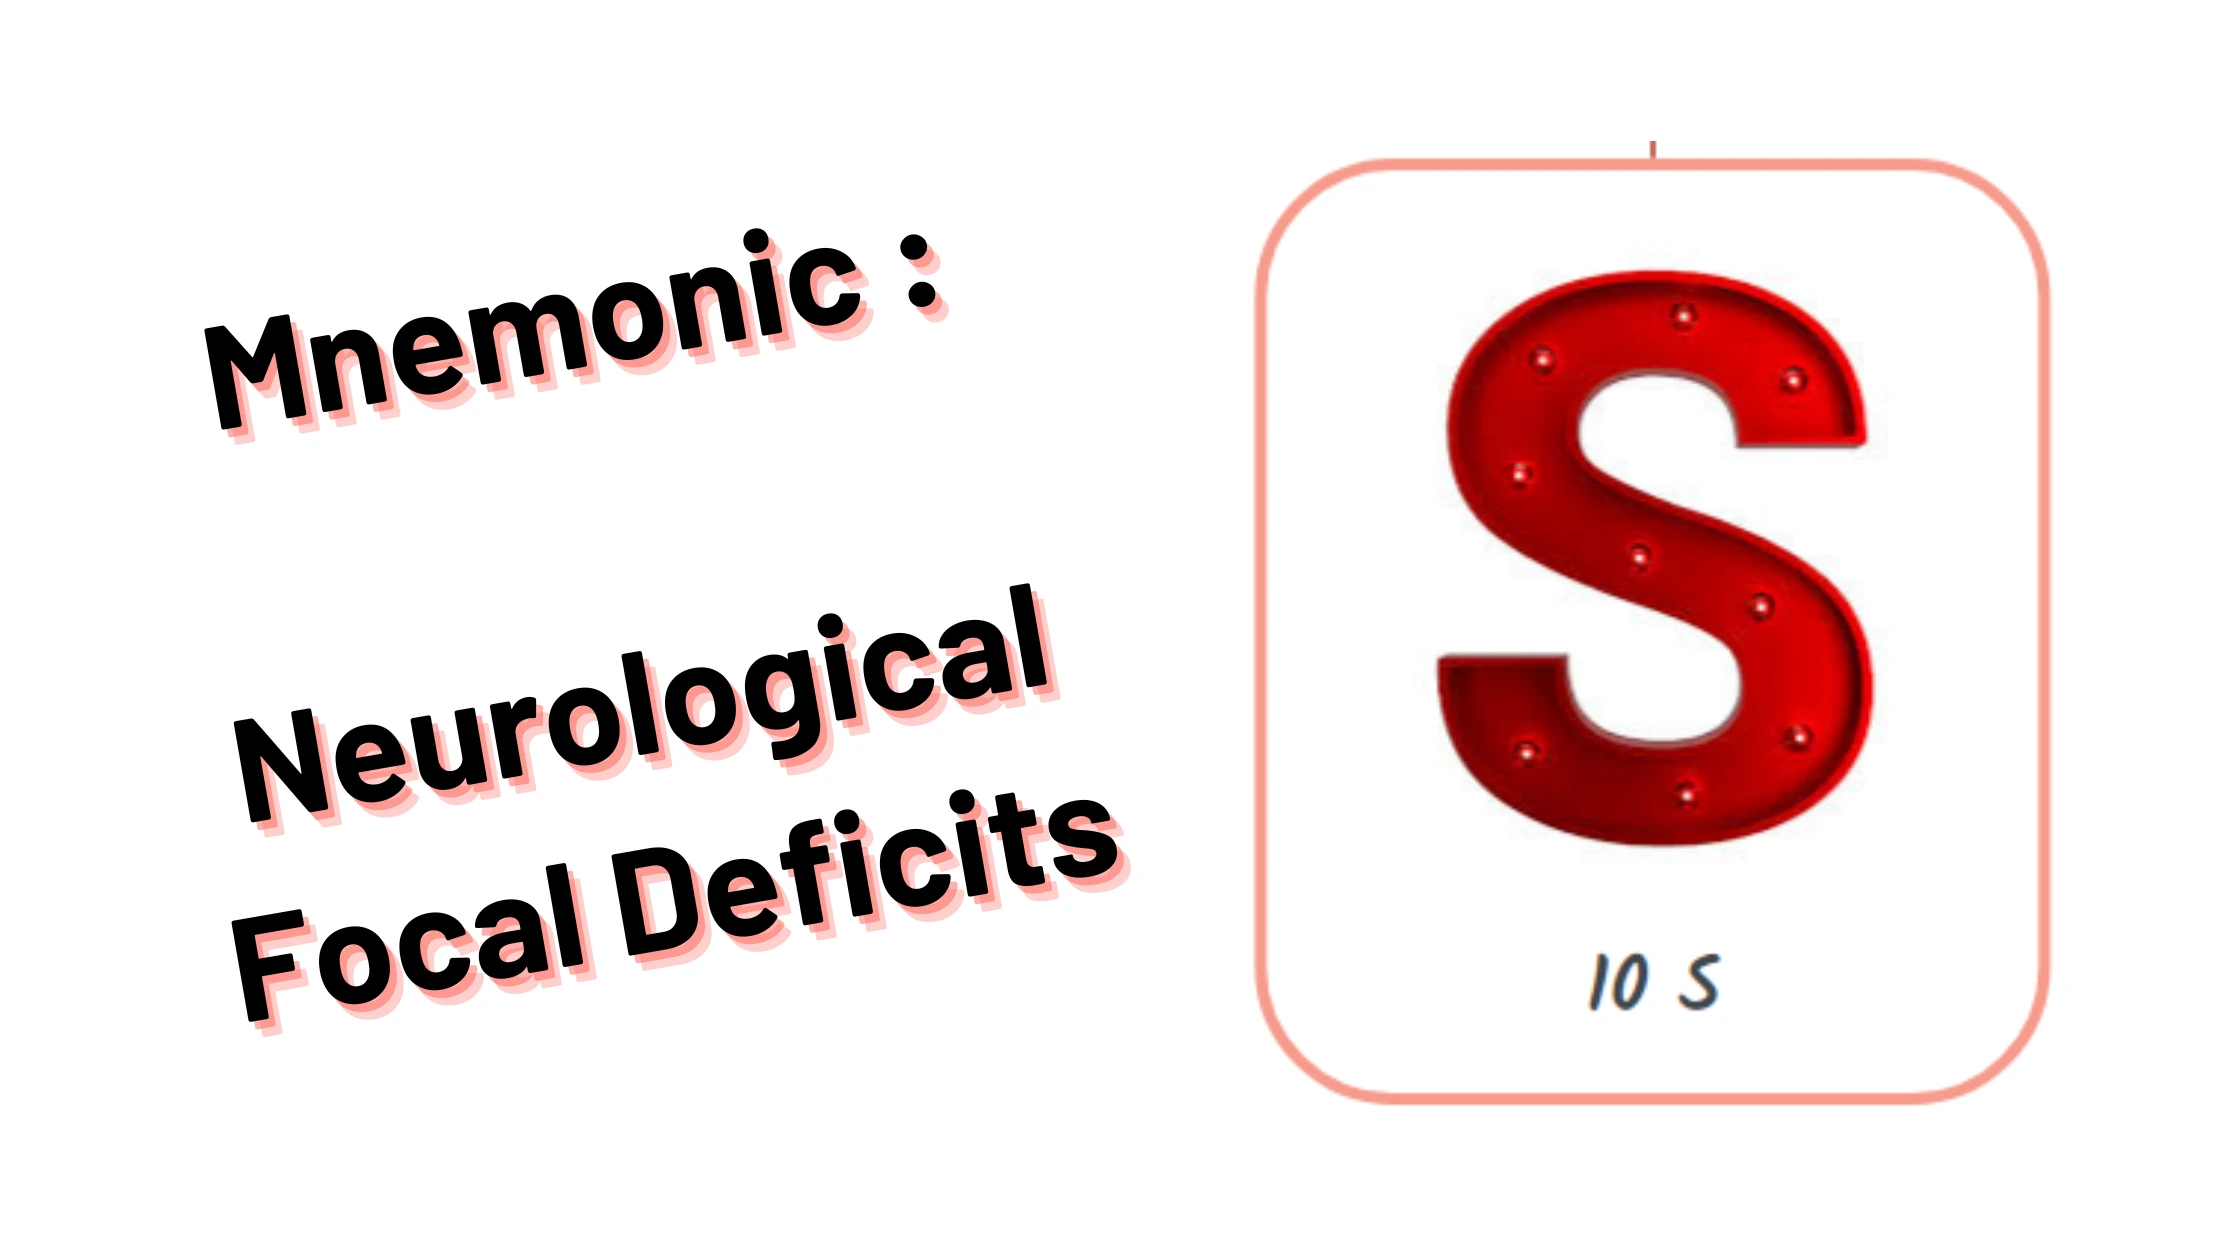 Neurological Focal Deficits Medical mnemonics